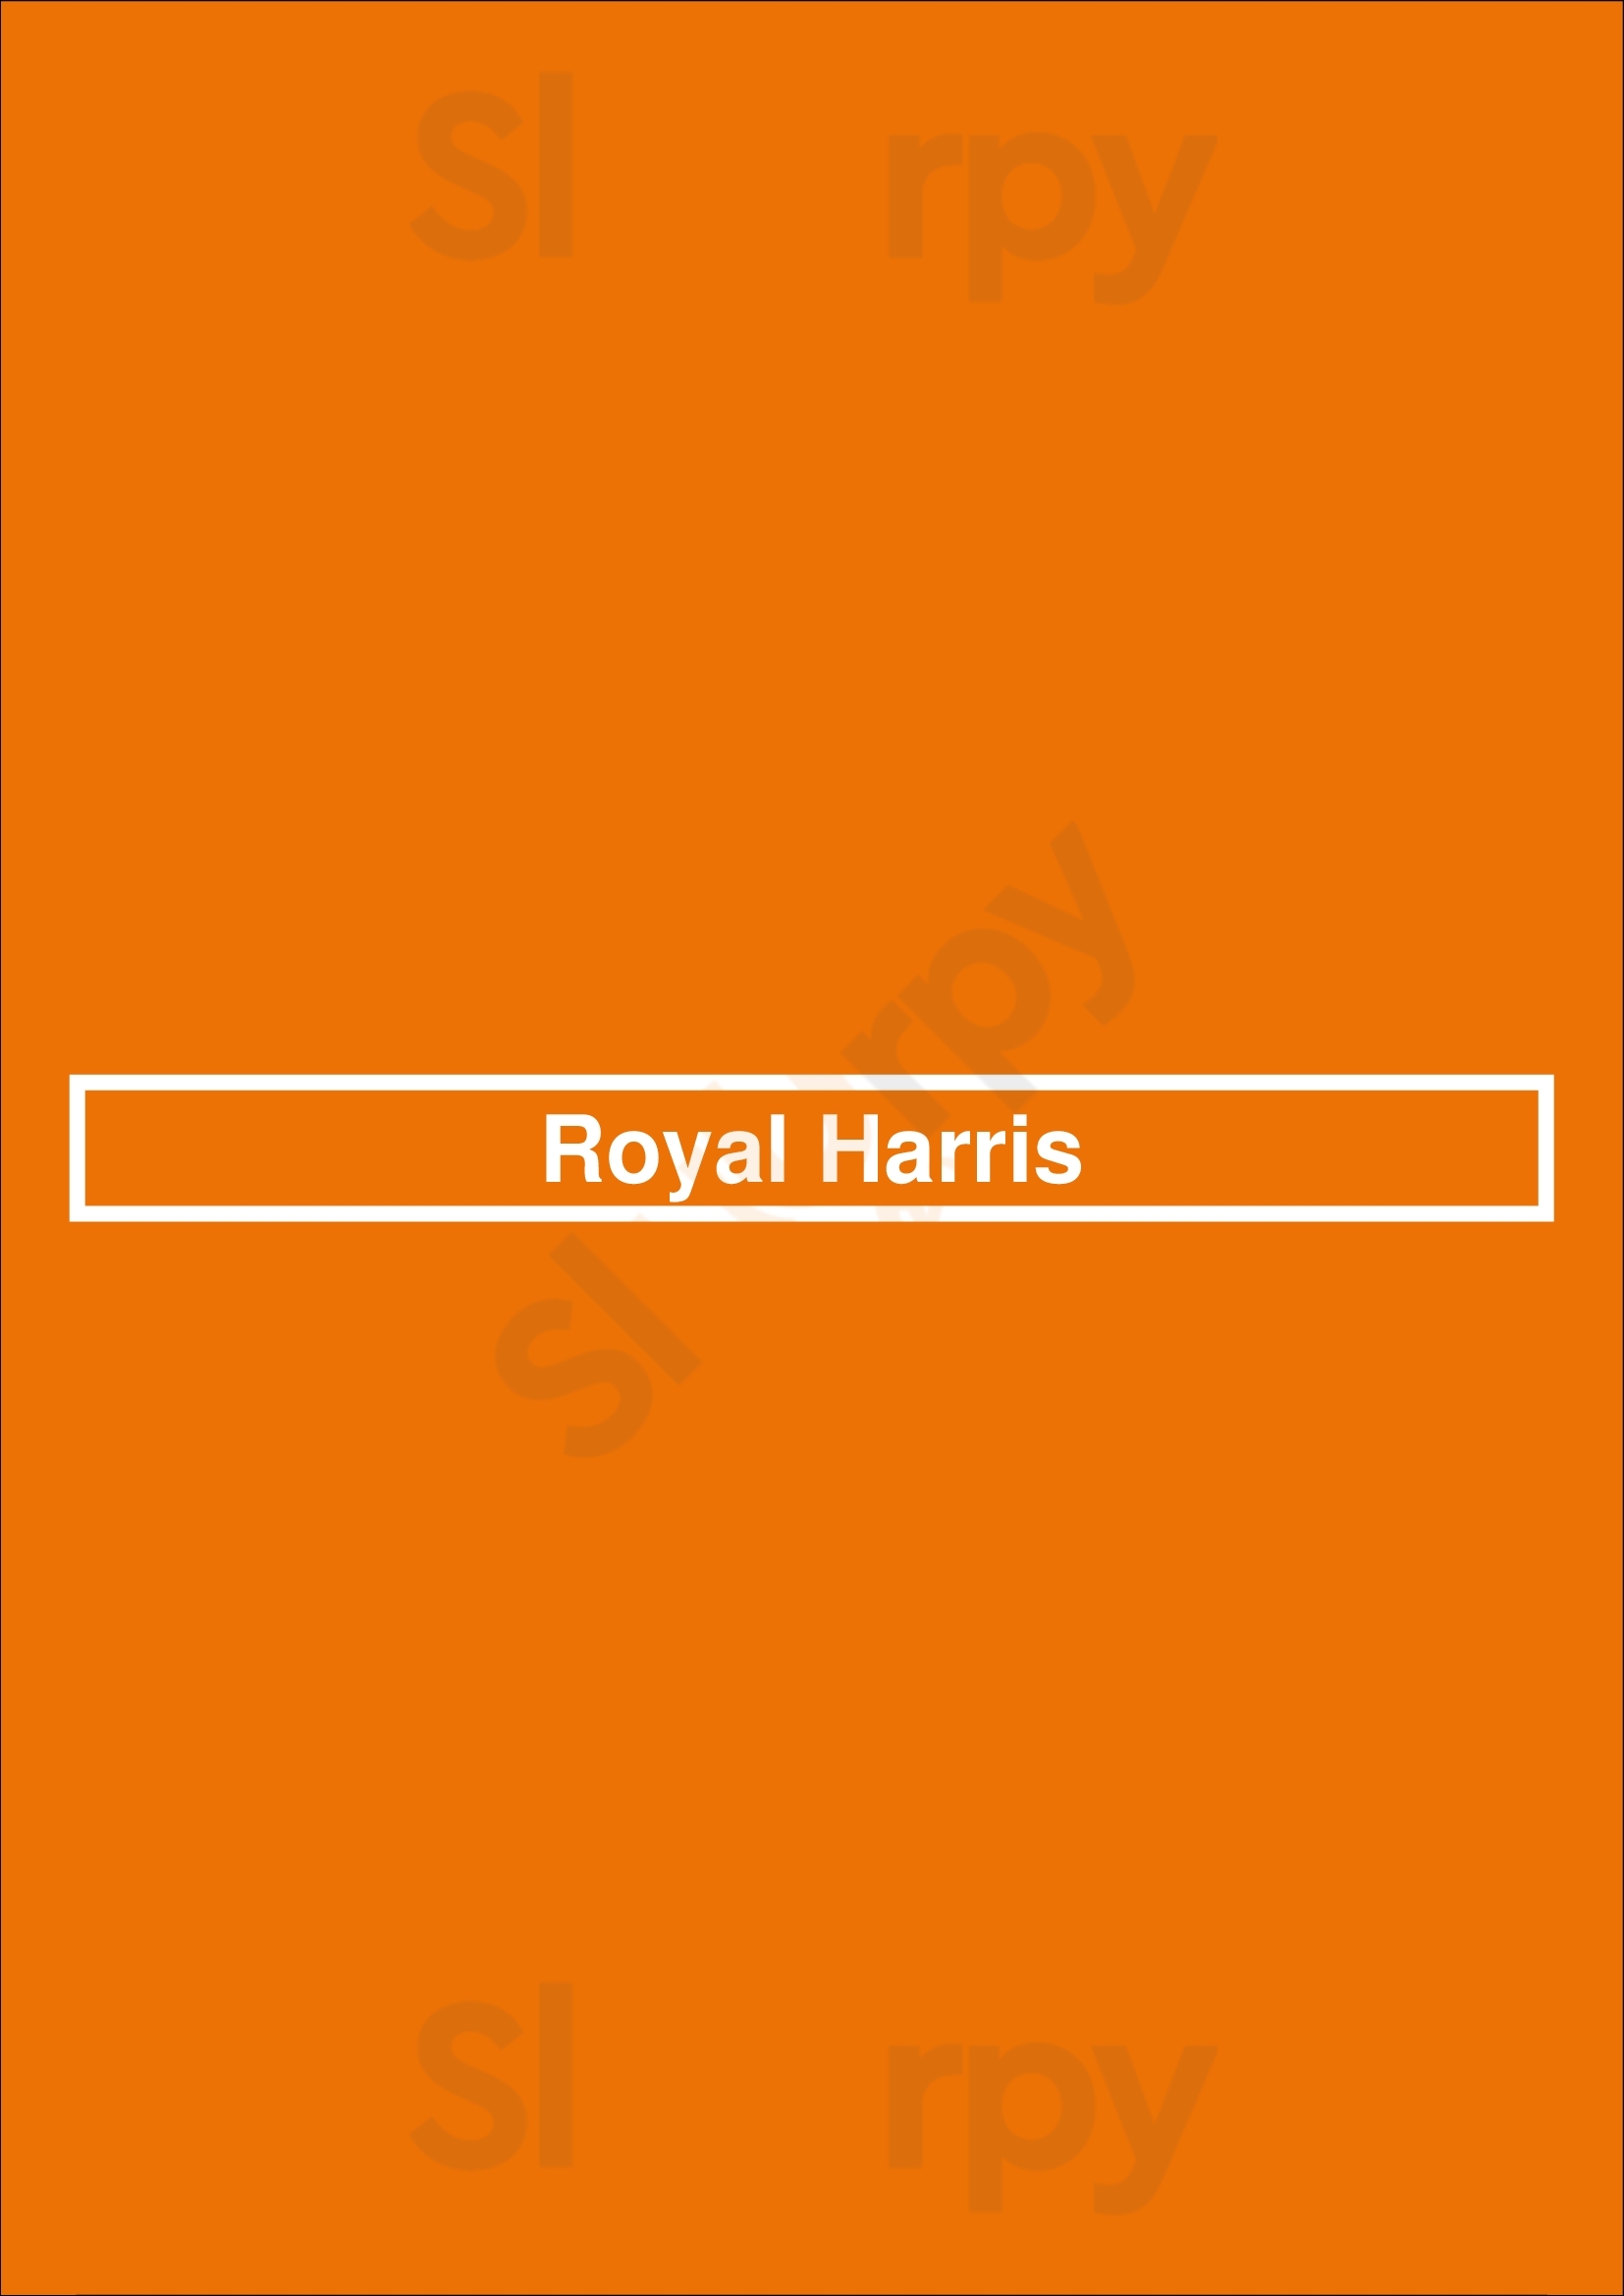 Royal Harris Burton upon Trent Menu - 1